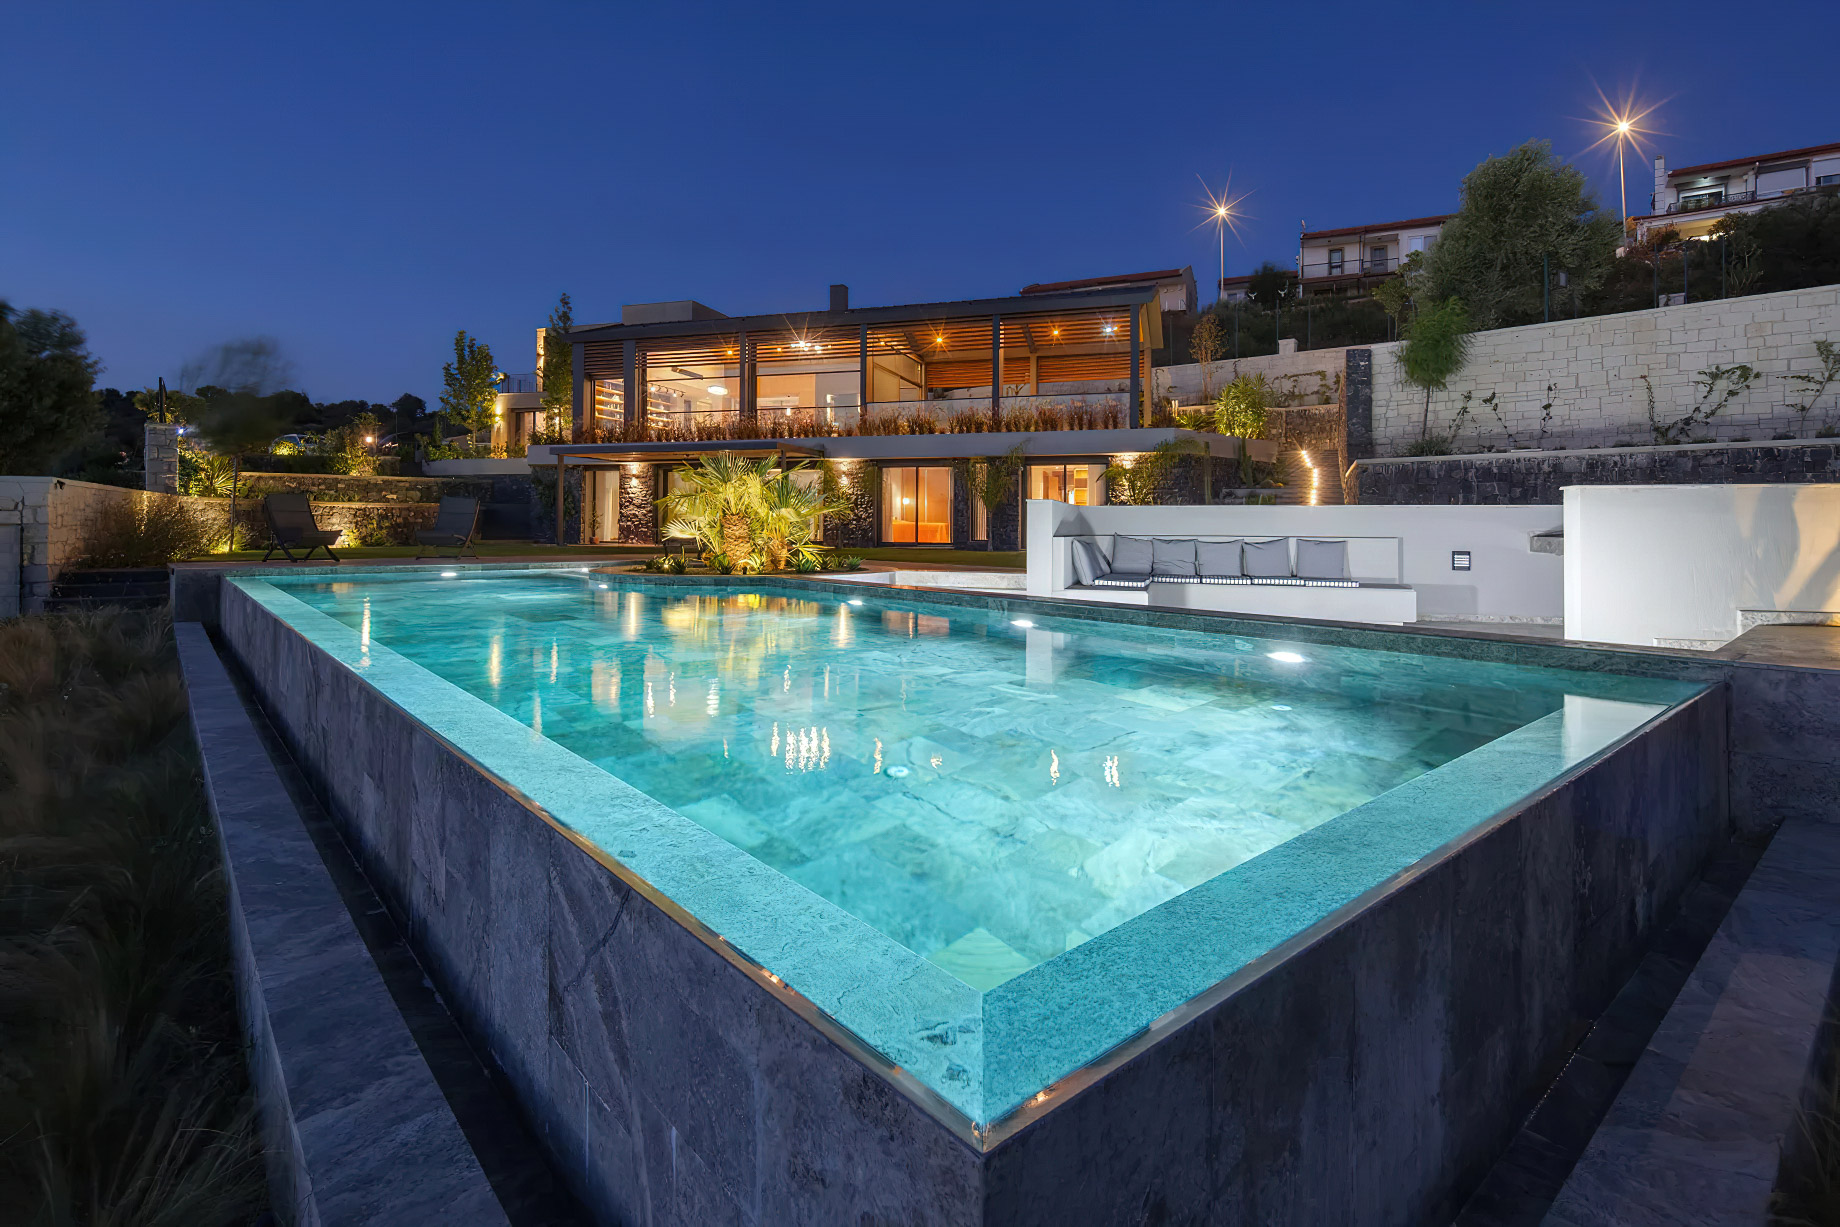 Villa Juss Modern Mediterranean Residence - Izmir, Turkey - Exterior Pool View Night